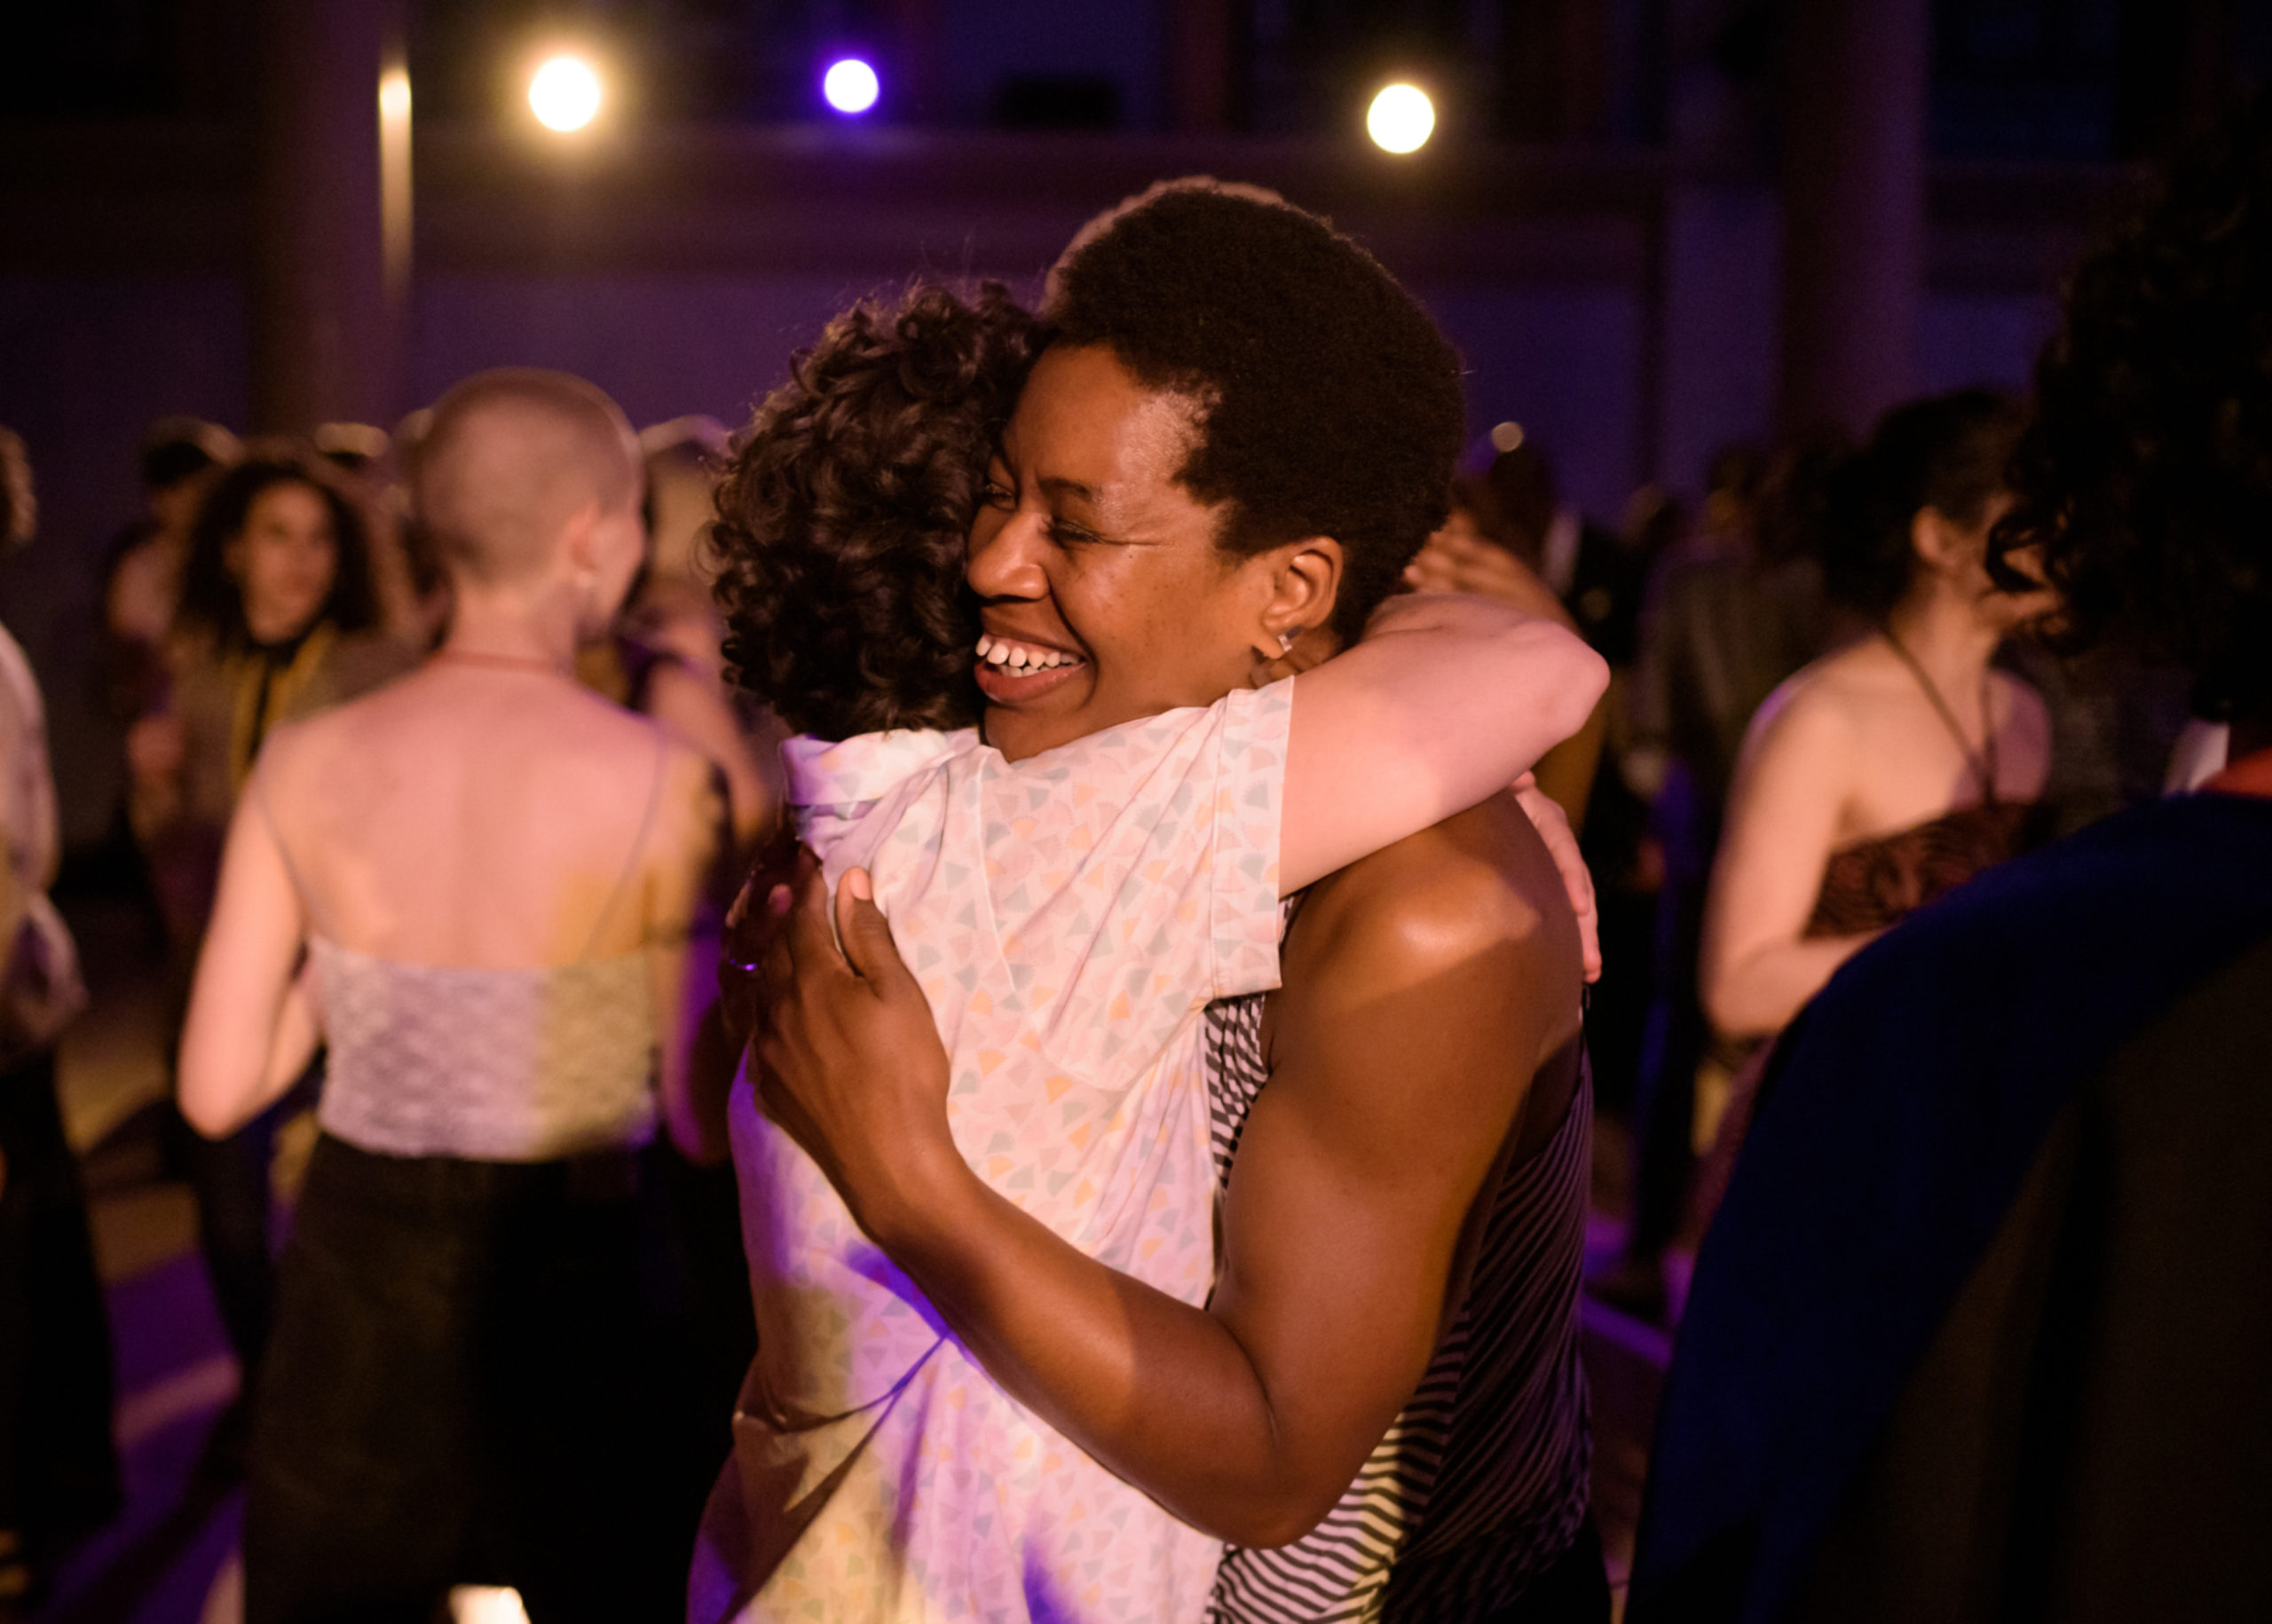 2 people hug each other on a dance floor